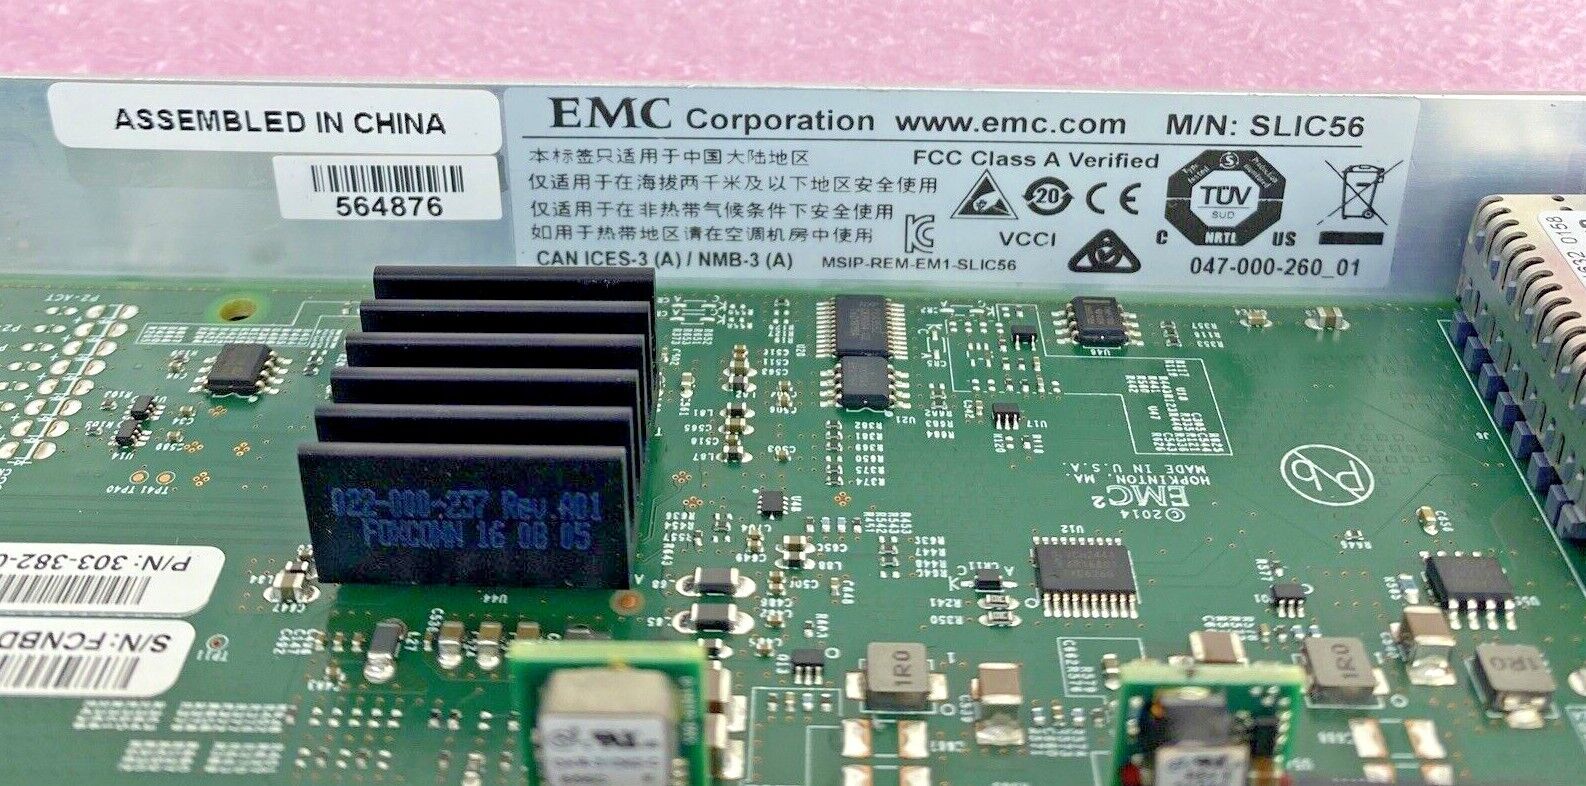 EMC Unity 303-382-000A-07 4-Port TLA PCB 1GbE Ethernet I/O Module